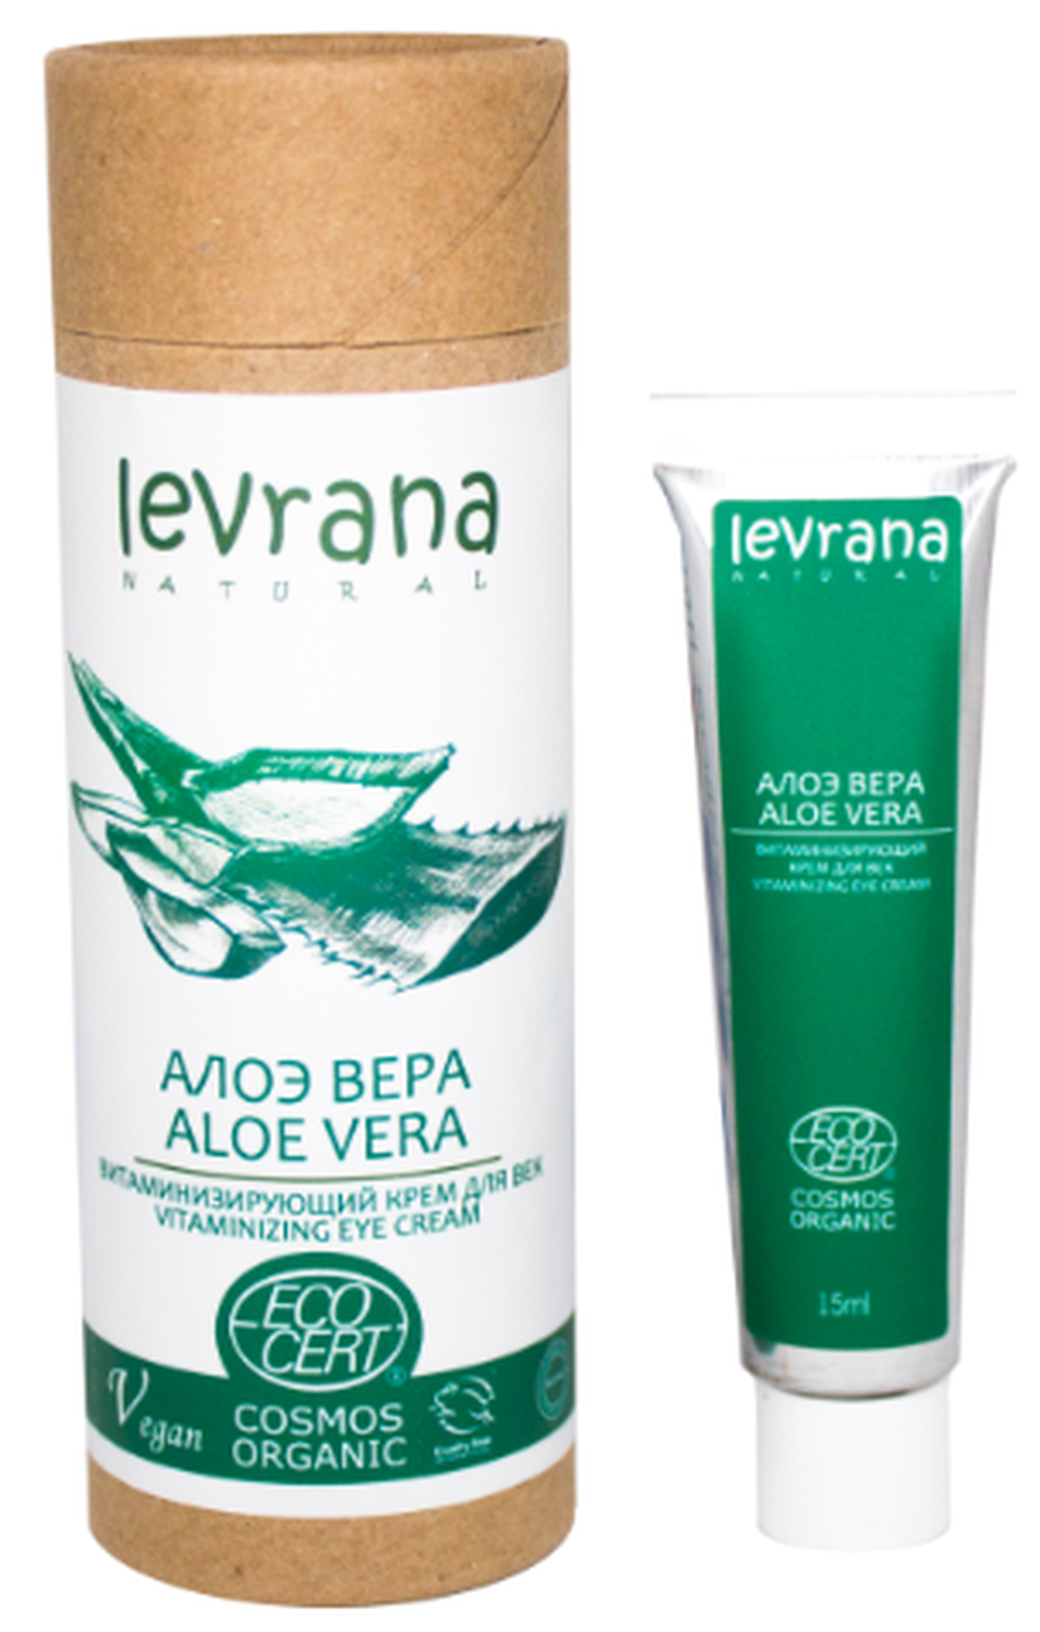 Levrana Крем для век Алоэ Вера, витаминизирующий, 15 мл COSMOS ORGANIC фото